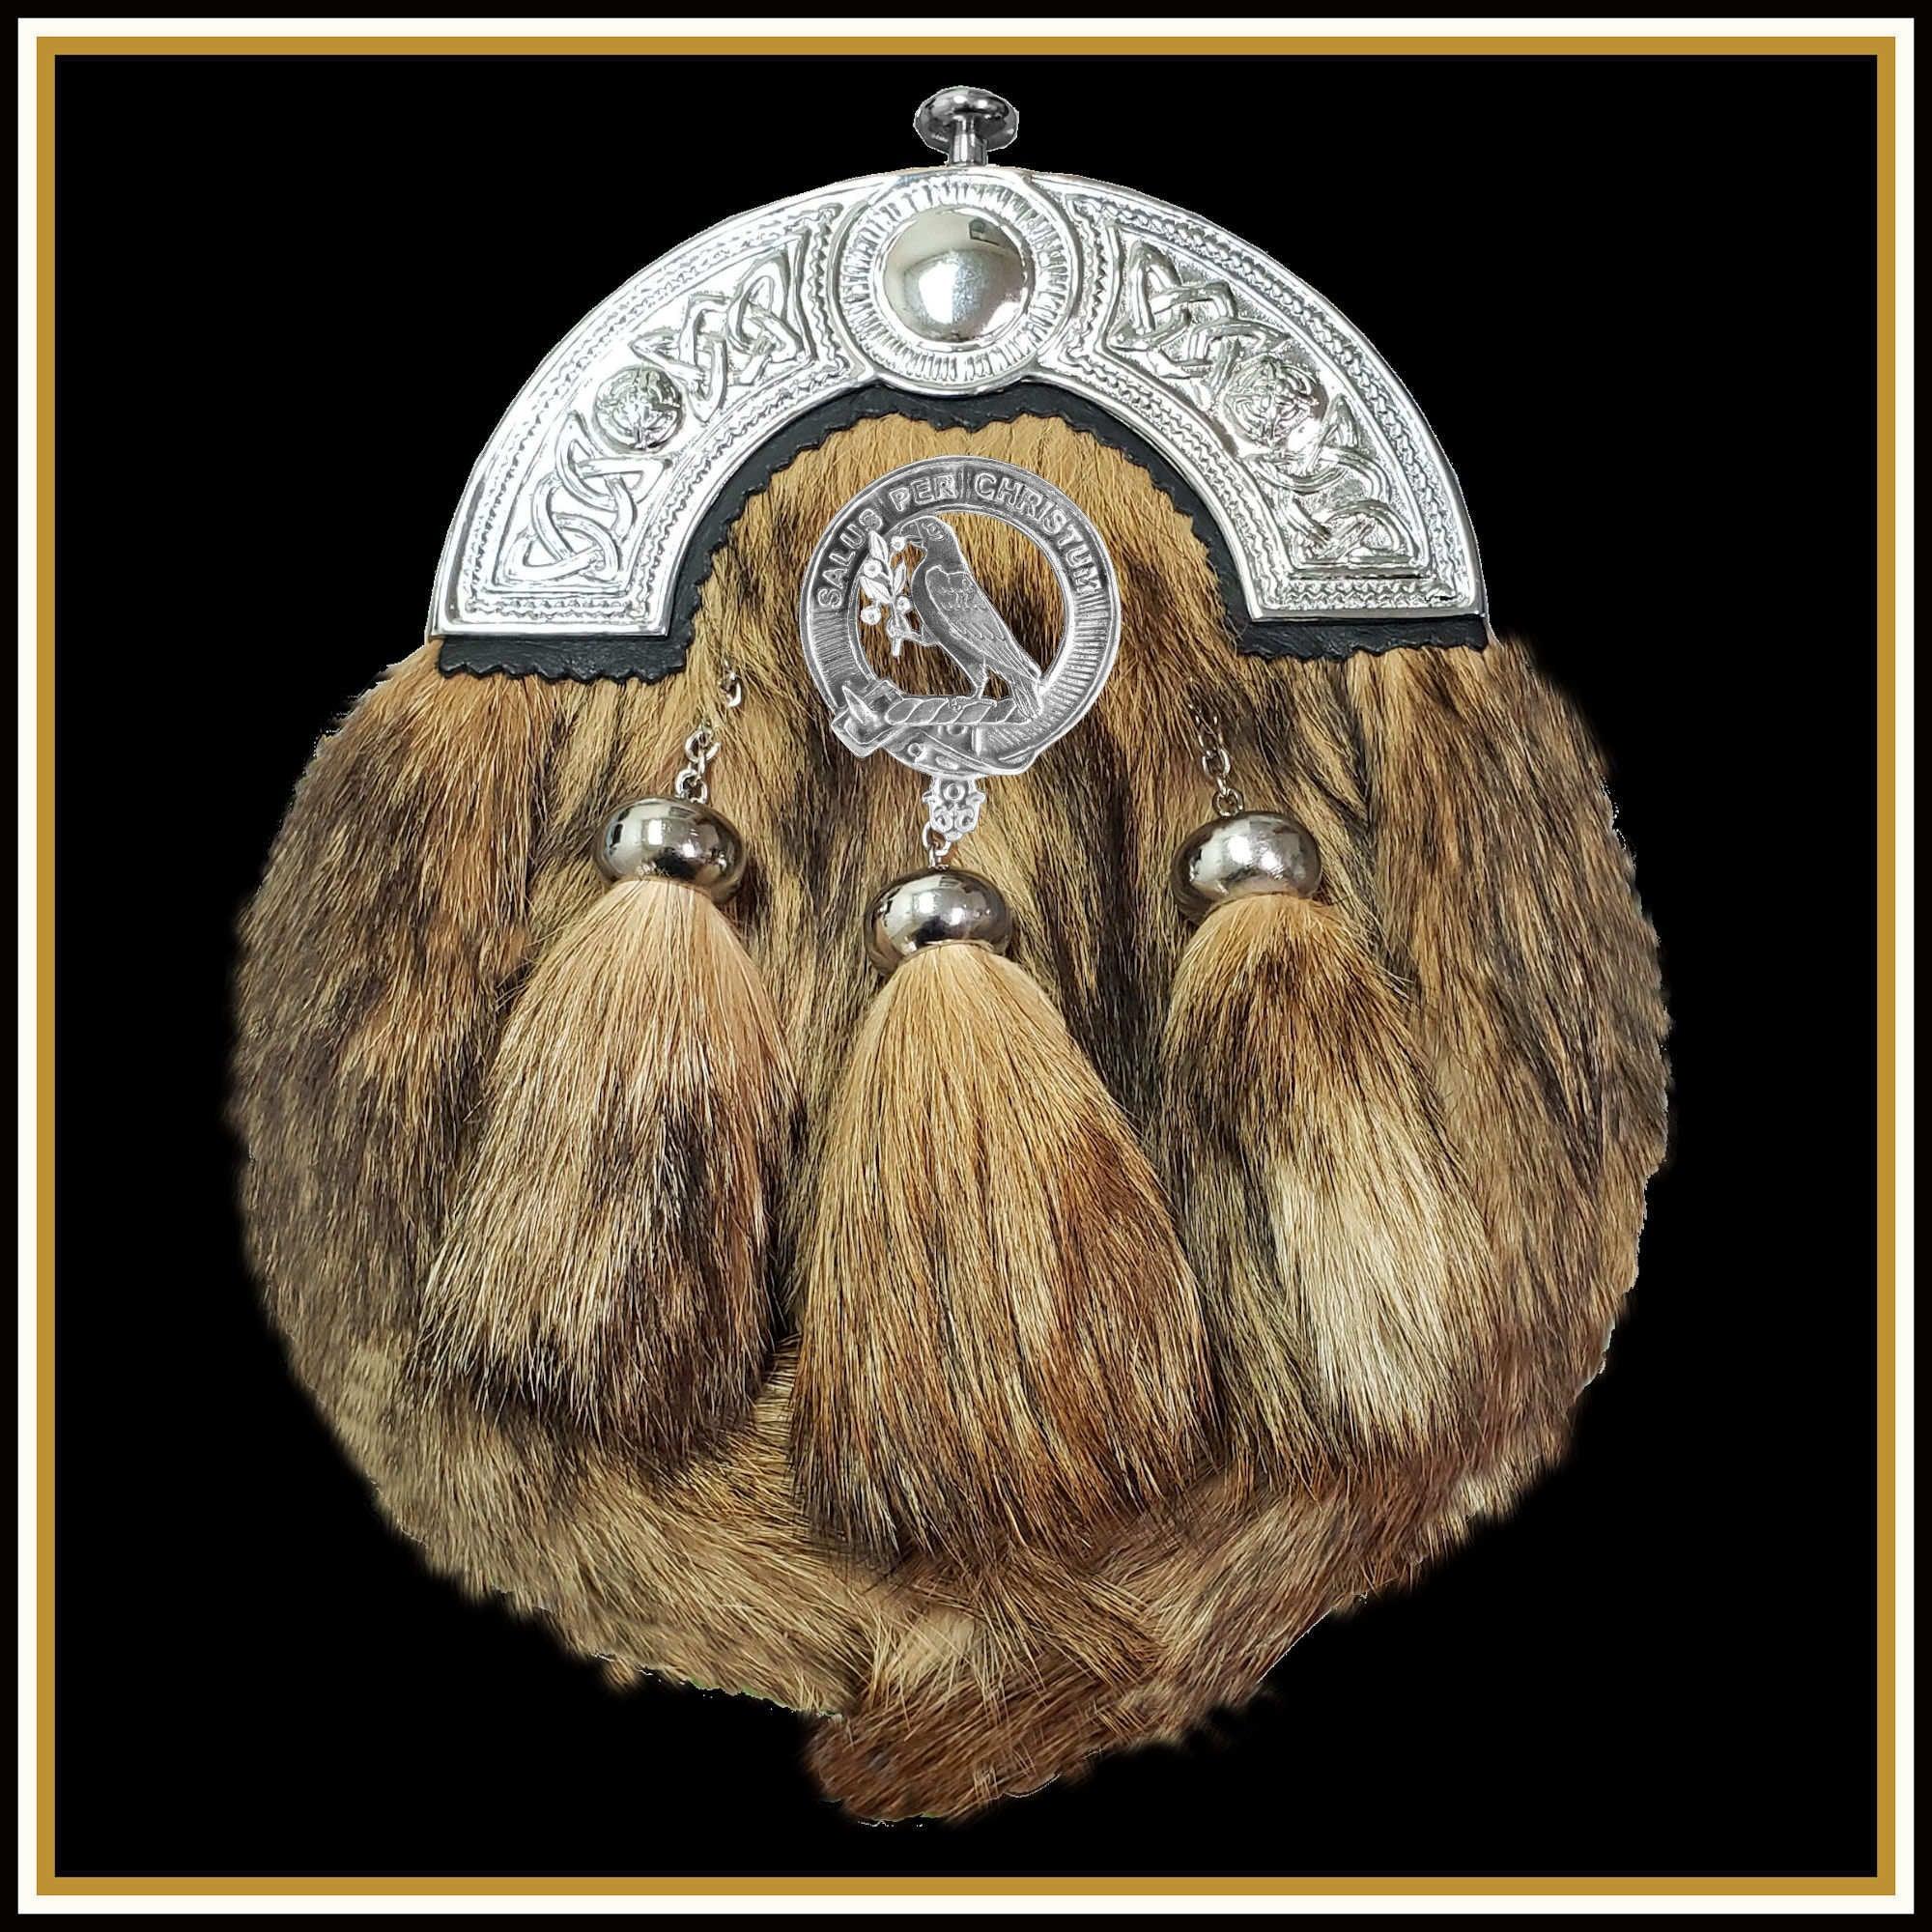 Abernethy Scottish Clan Crest Badge Dress Fur Sporran